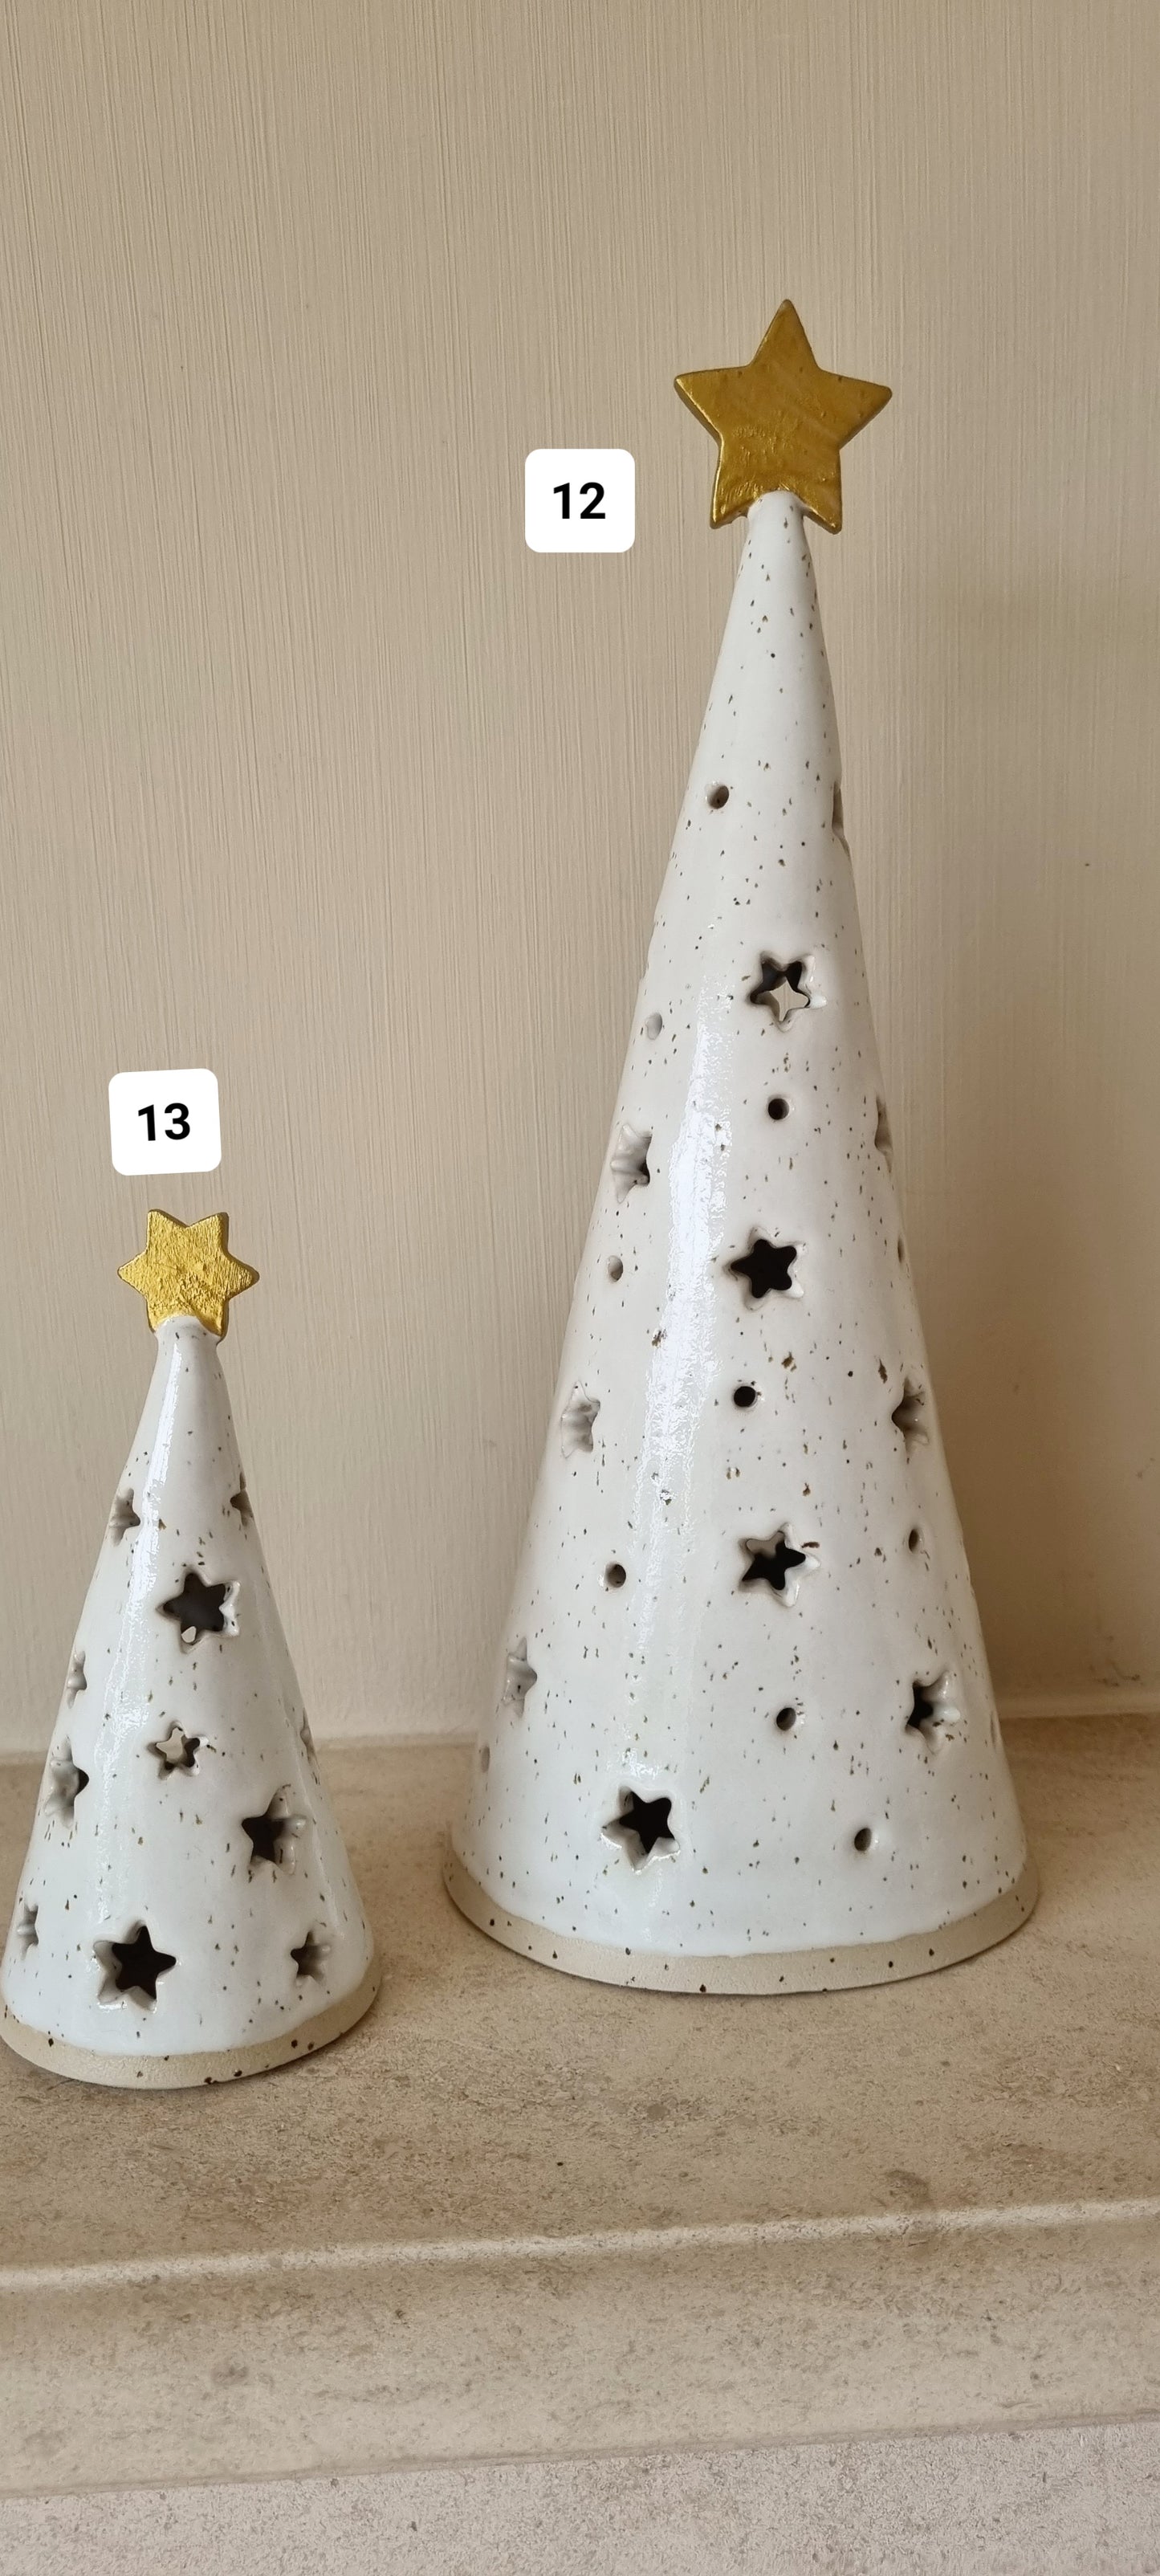 Ceramic Christmas Tree Candle Holder, white handmade Holiday luminary